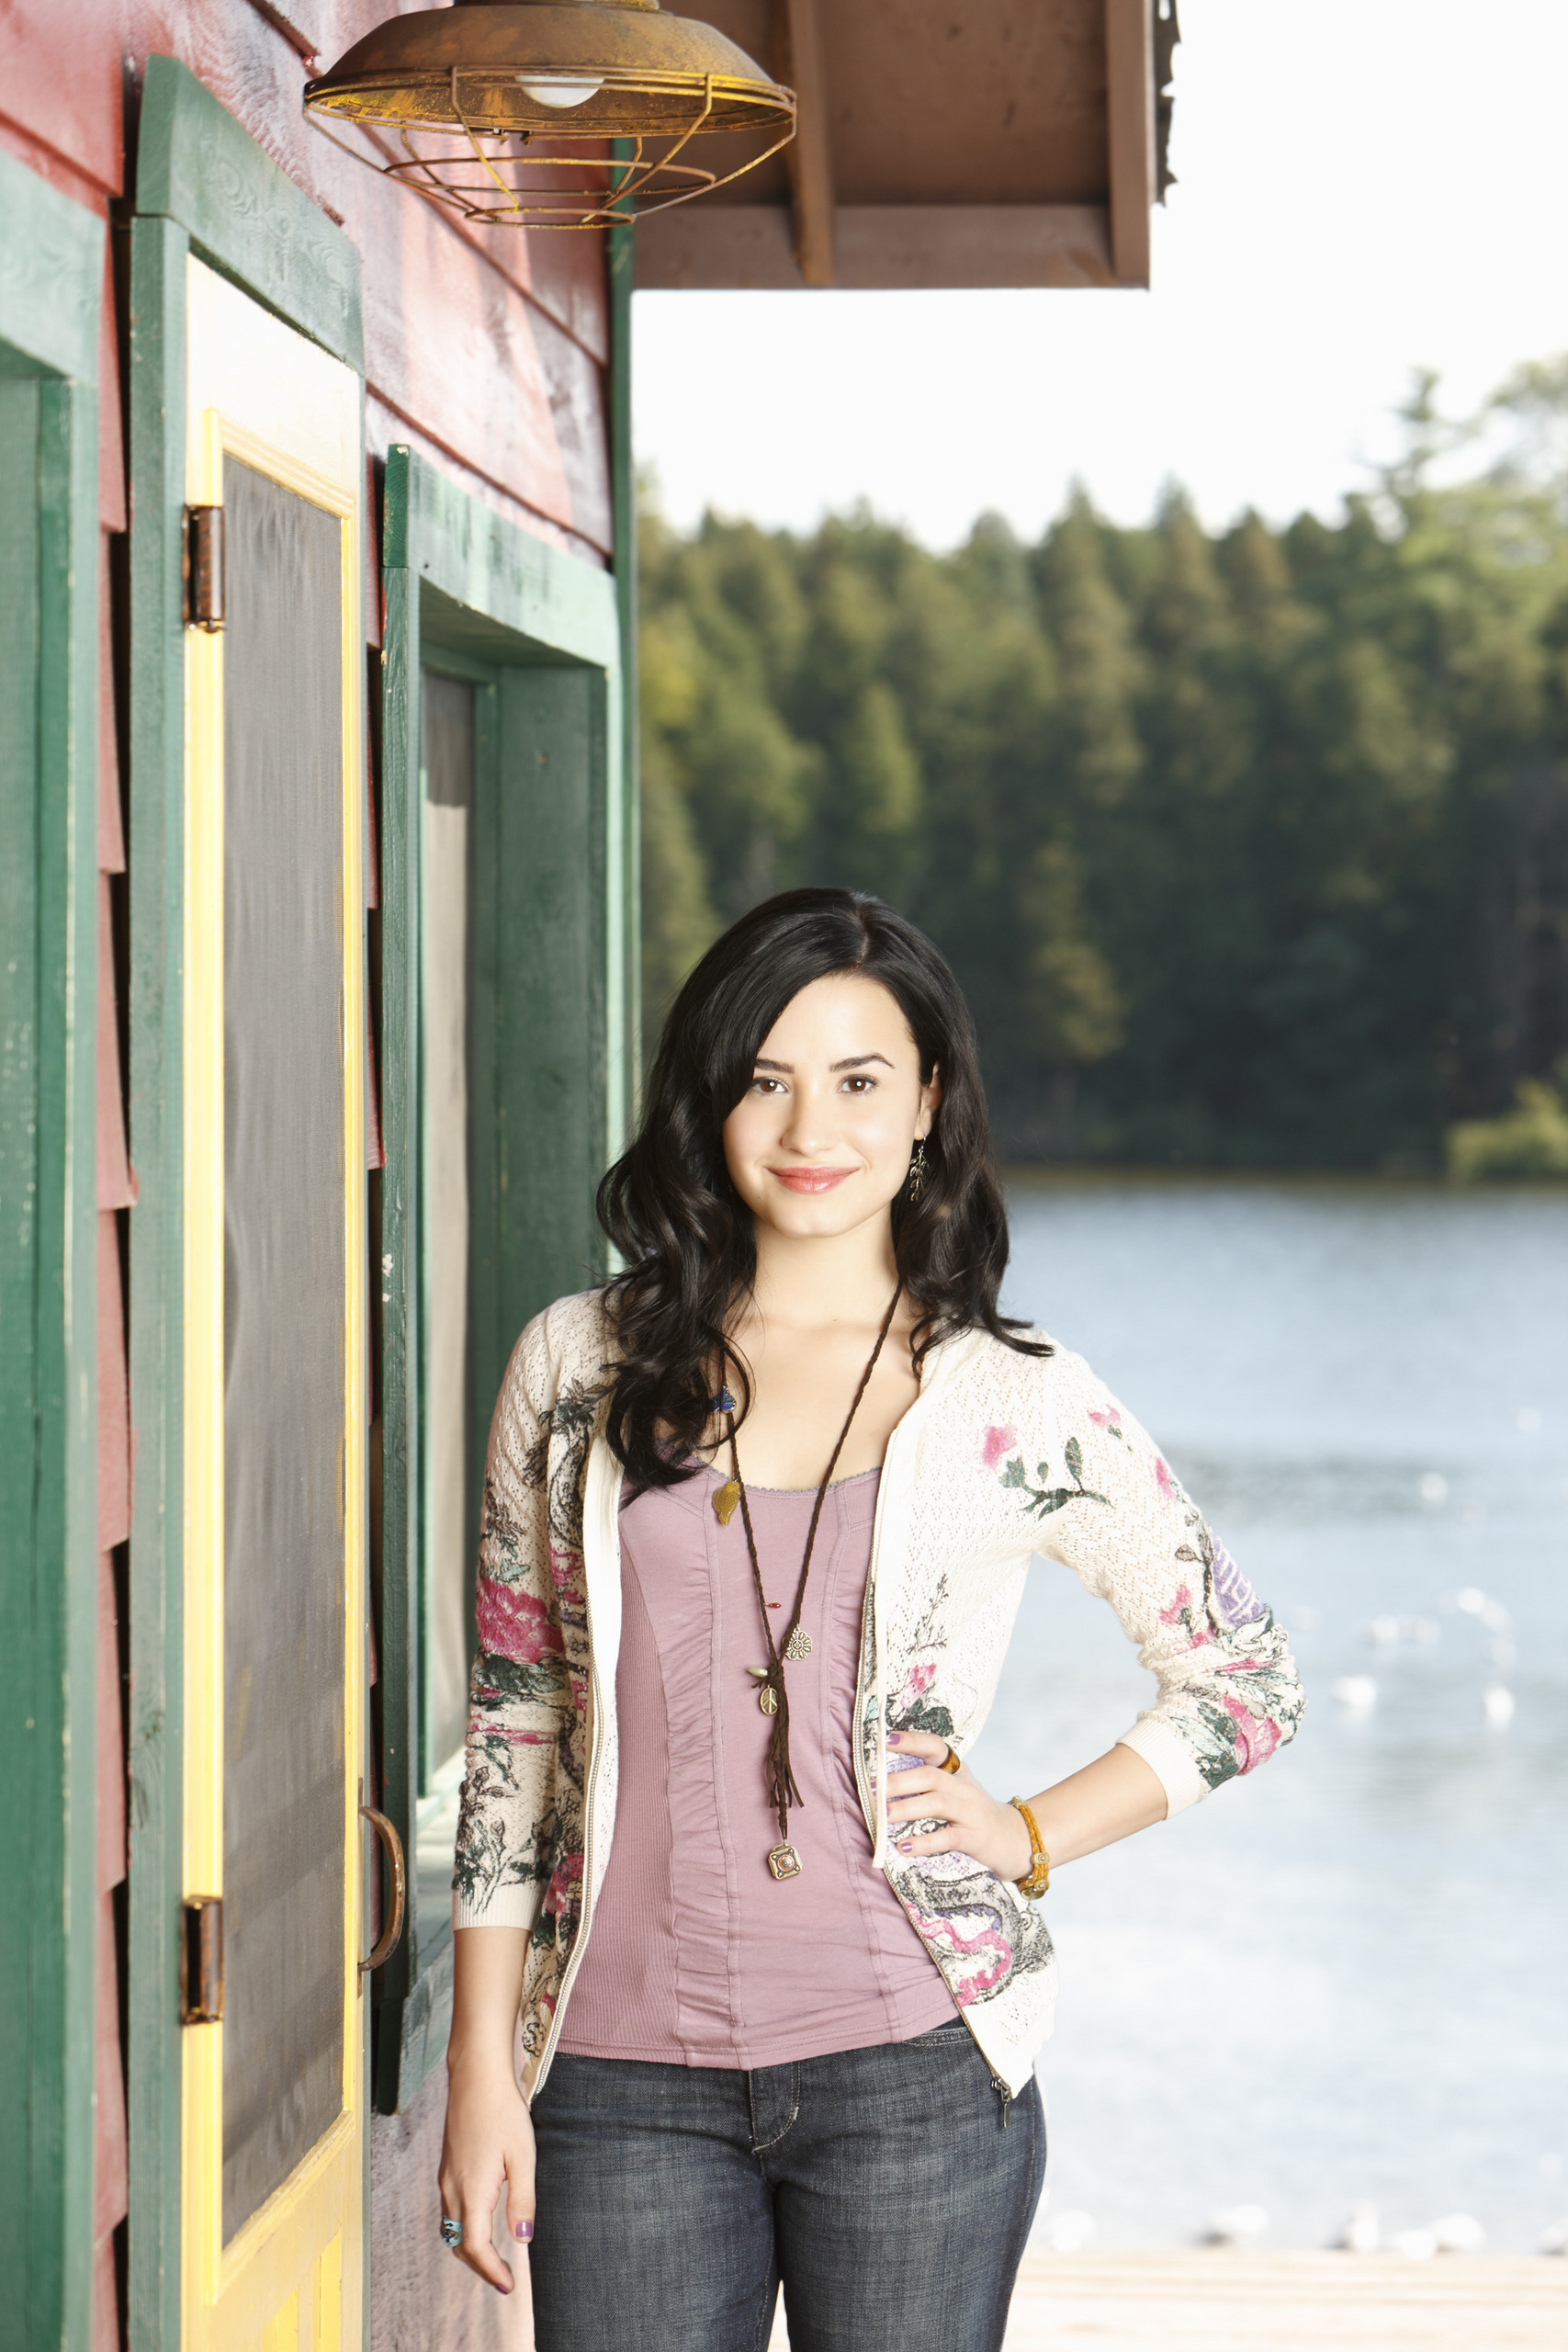 Demi Lovato - Camp Rock 2: The Final Jam promoshoot (2010) - Anichu90 Photo (16820059 ...1707 x 2560